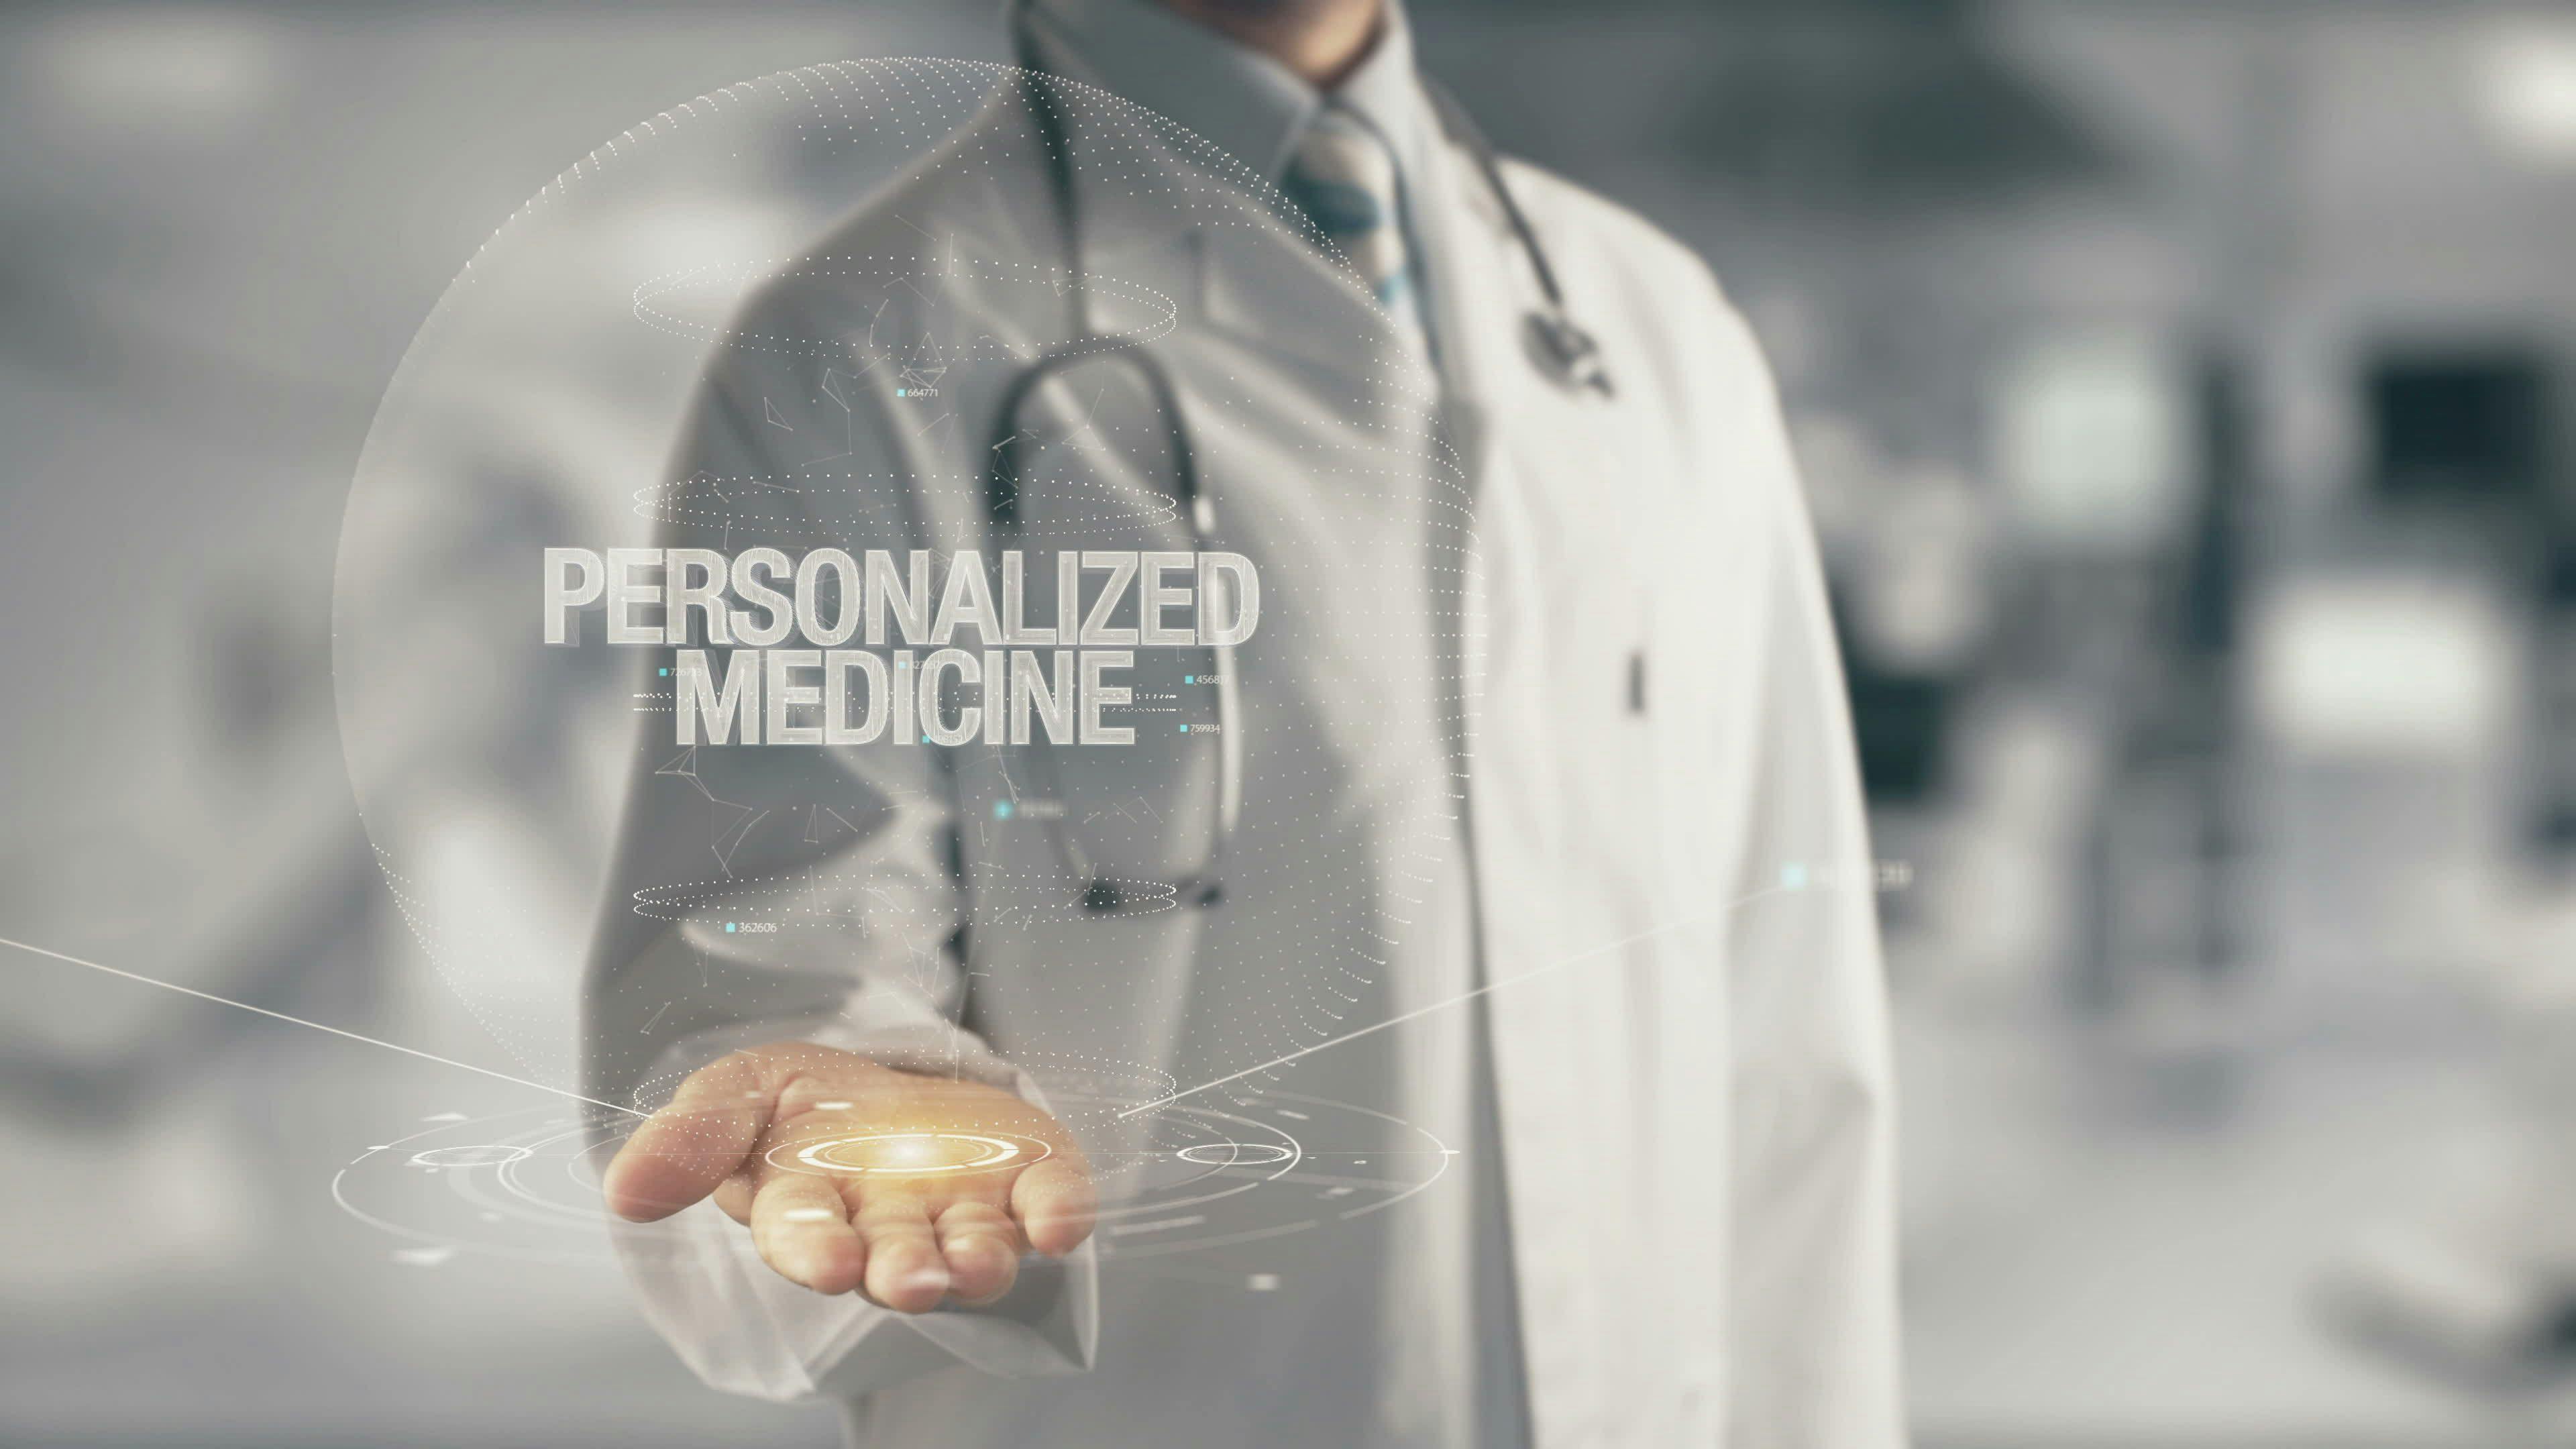 Personalized Medicine | image credit: Anar Mammadov